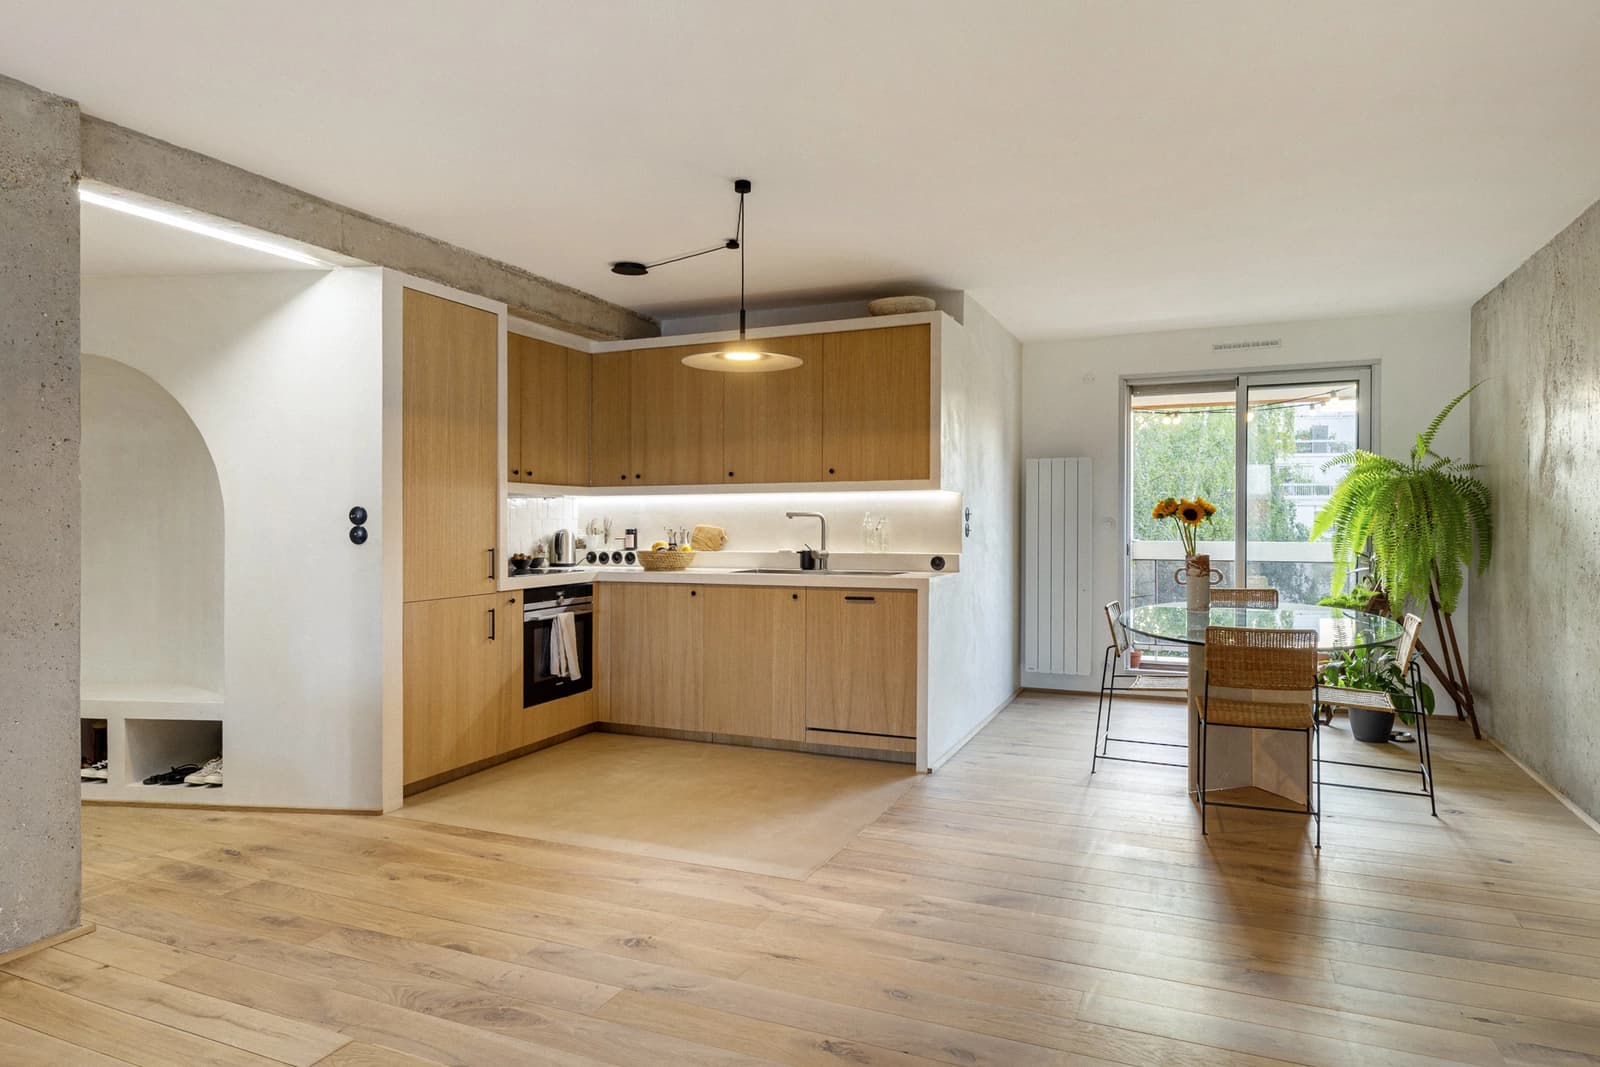 Kitchen dentro Piso moderno y minimalista - 4